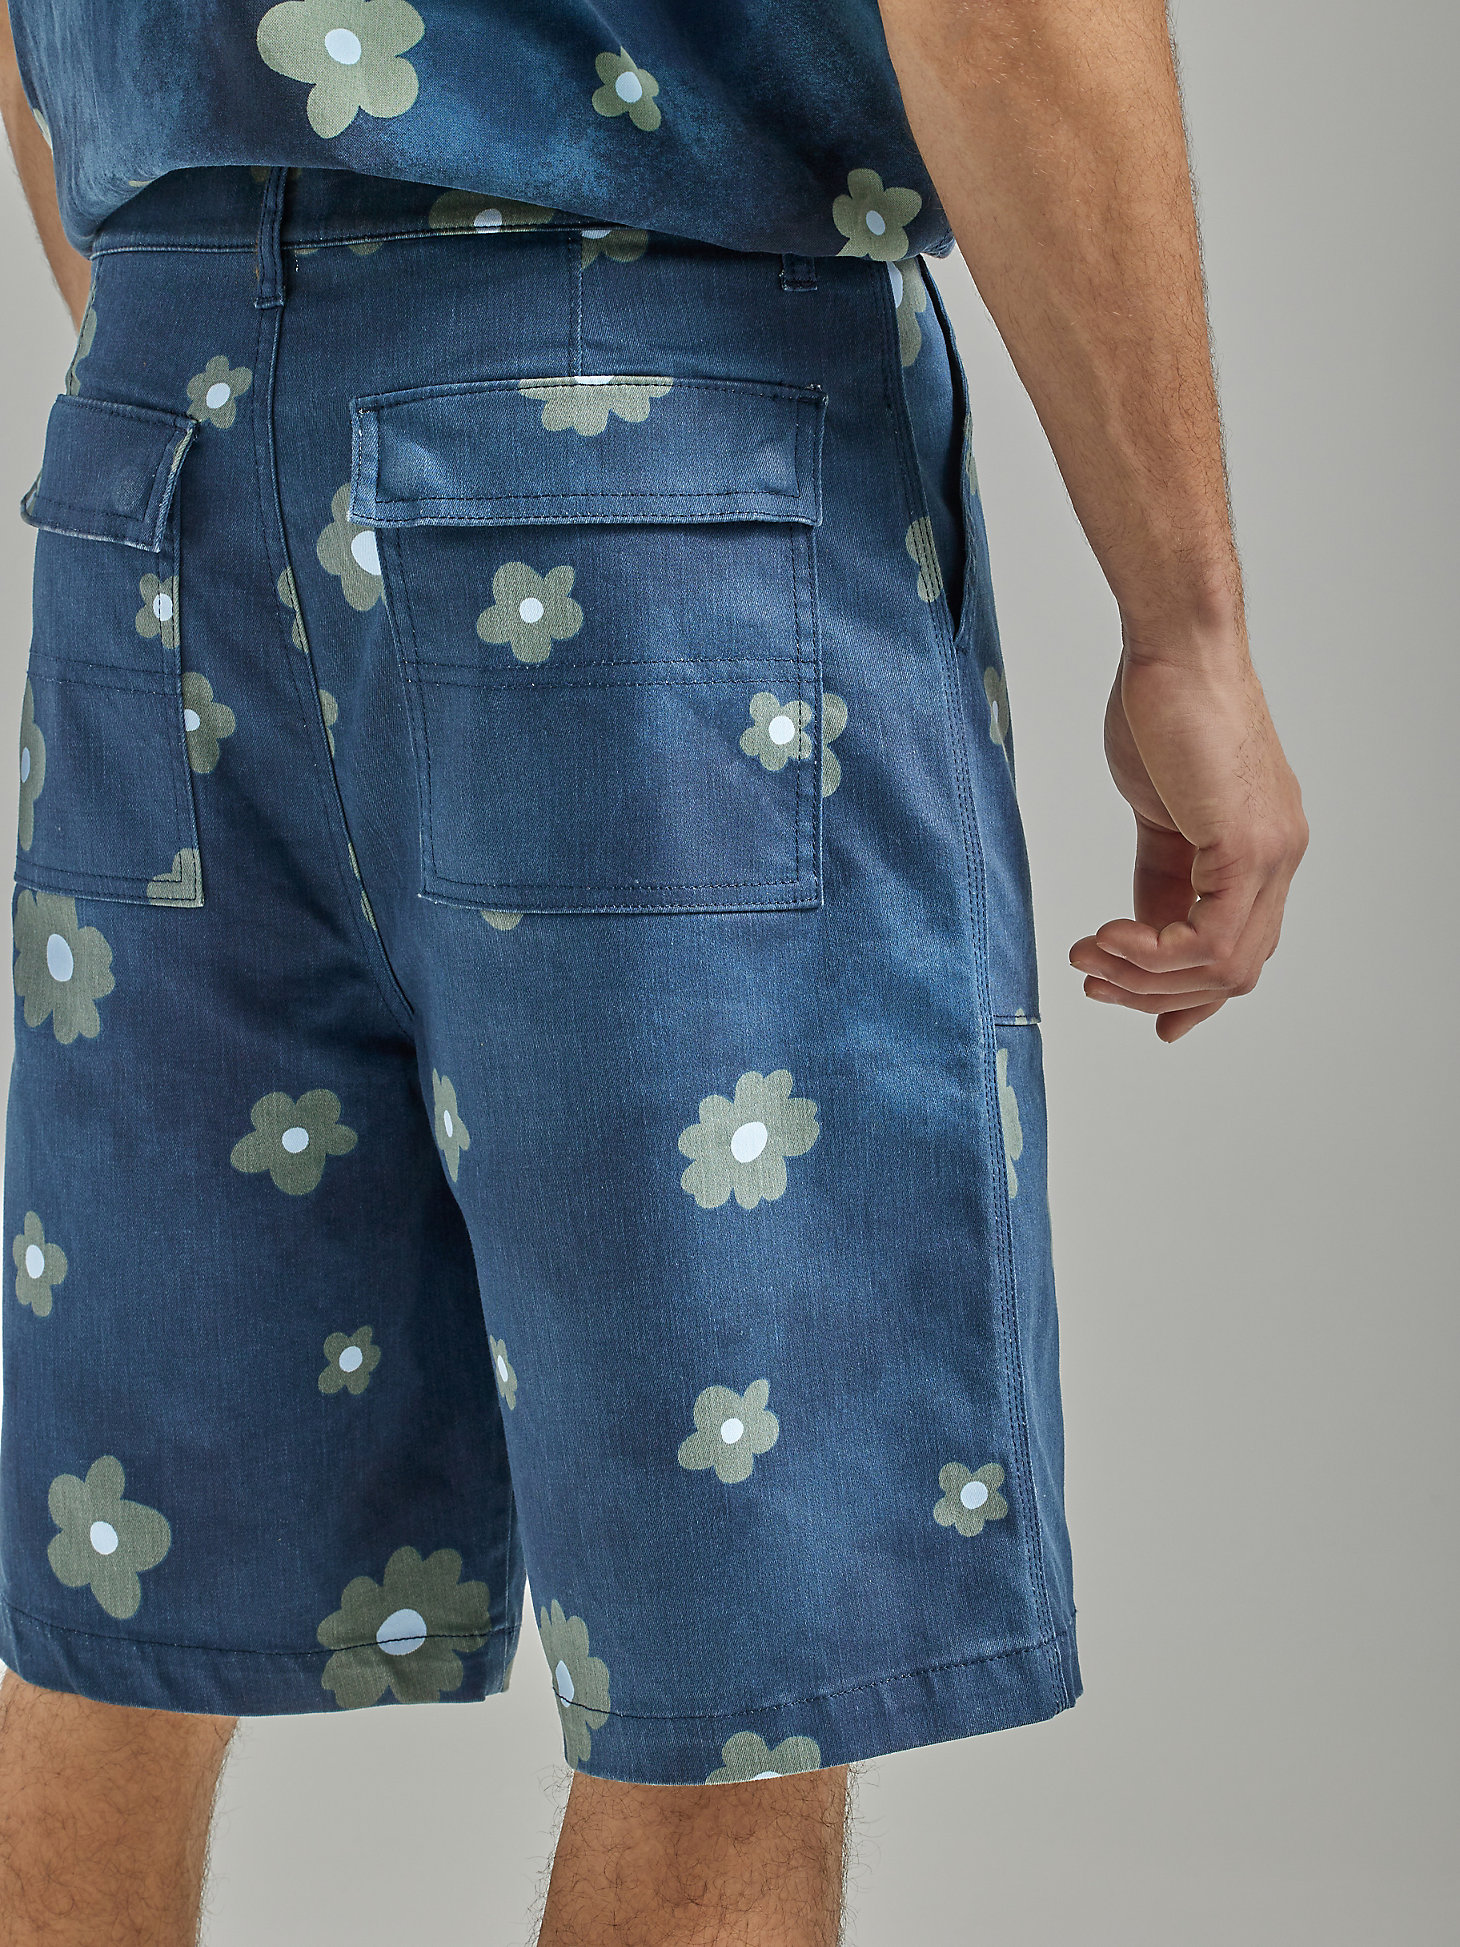 Men's Chetopa Pleated Front Short in Rivet Navy Floral alternative view 4